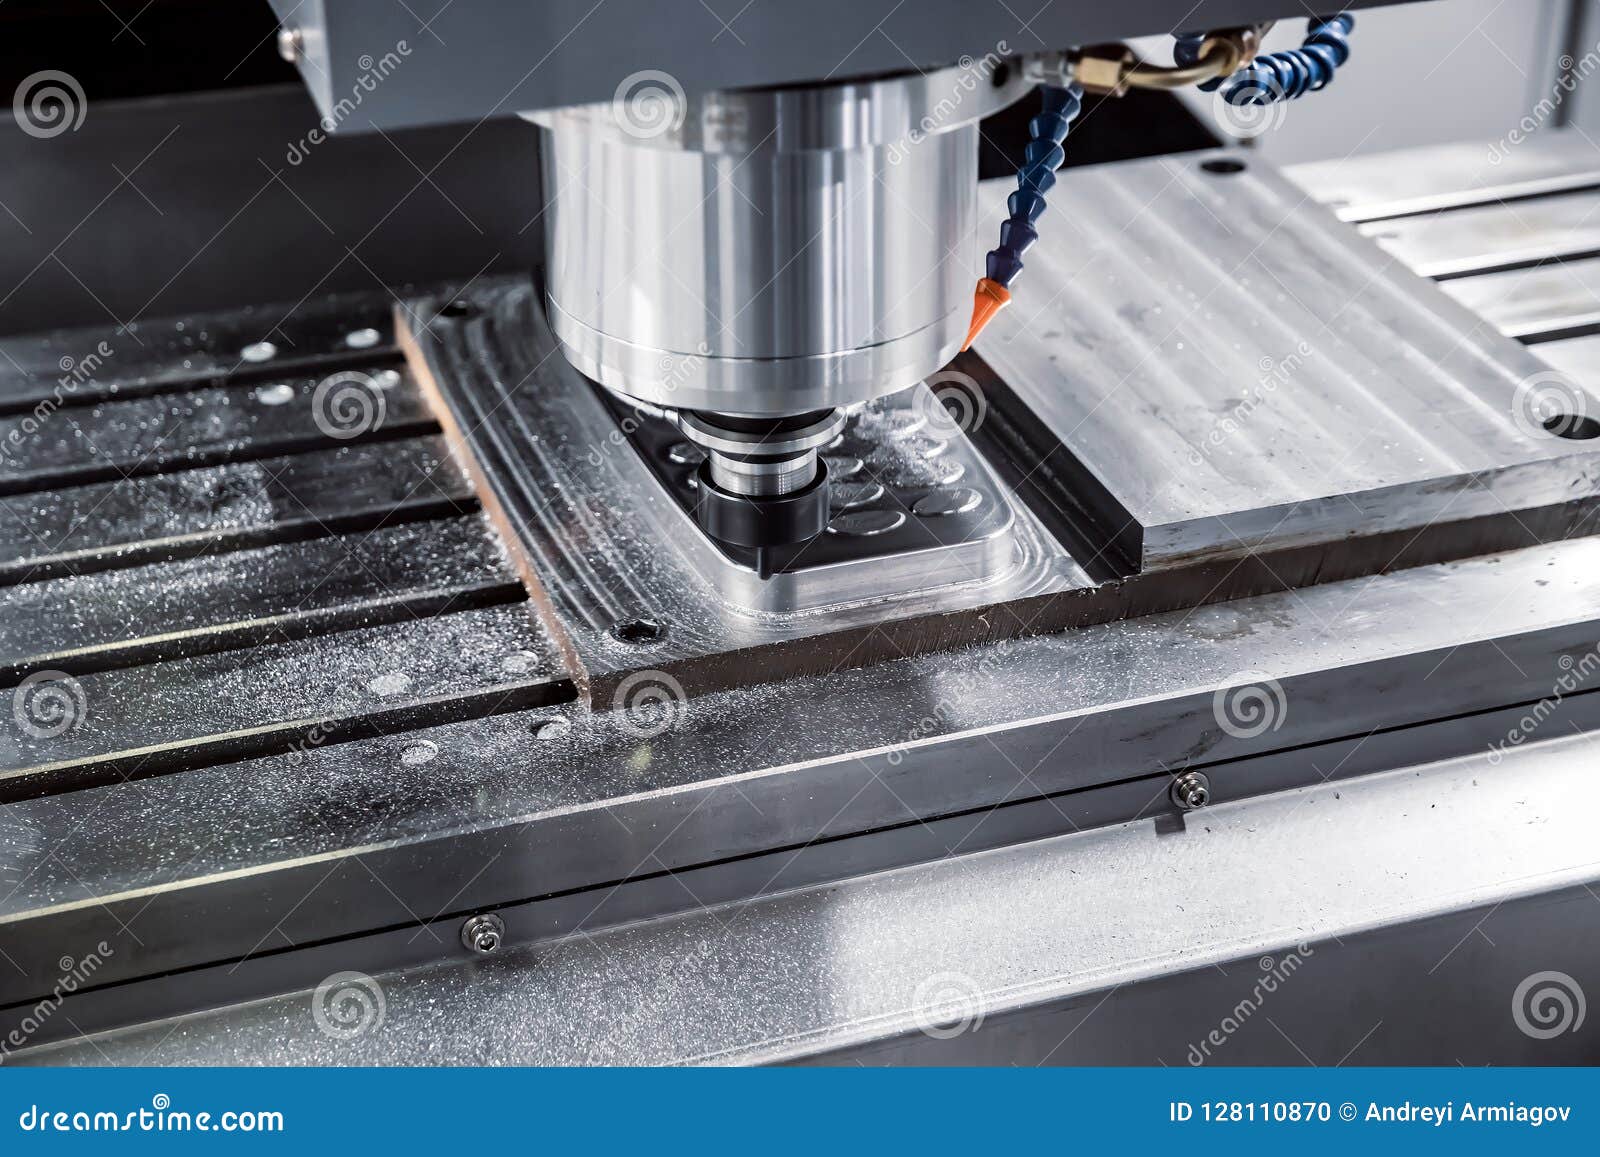 metalworking cnc milling machine. cutting metal modern processing technology.